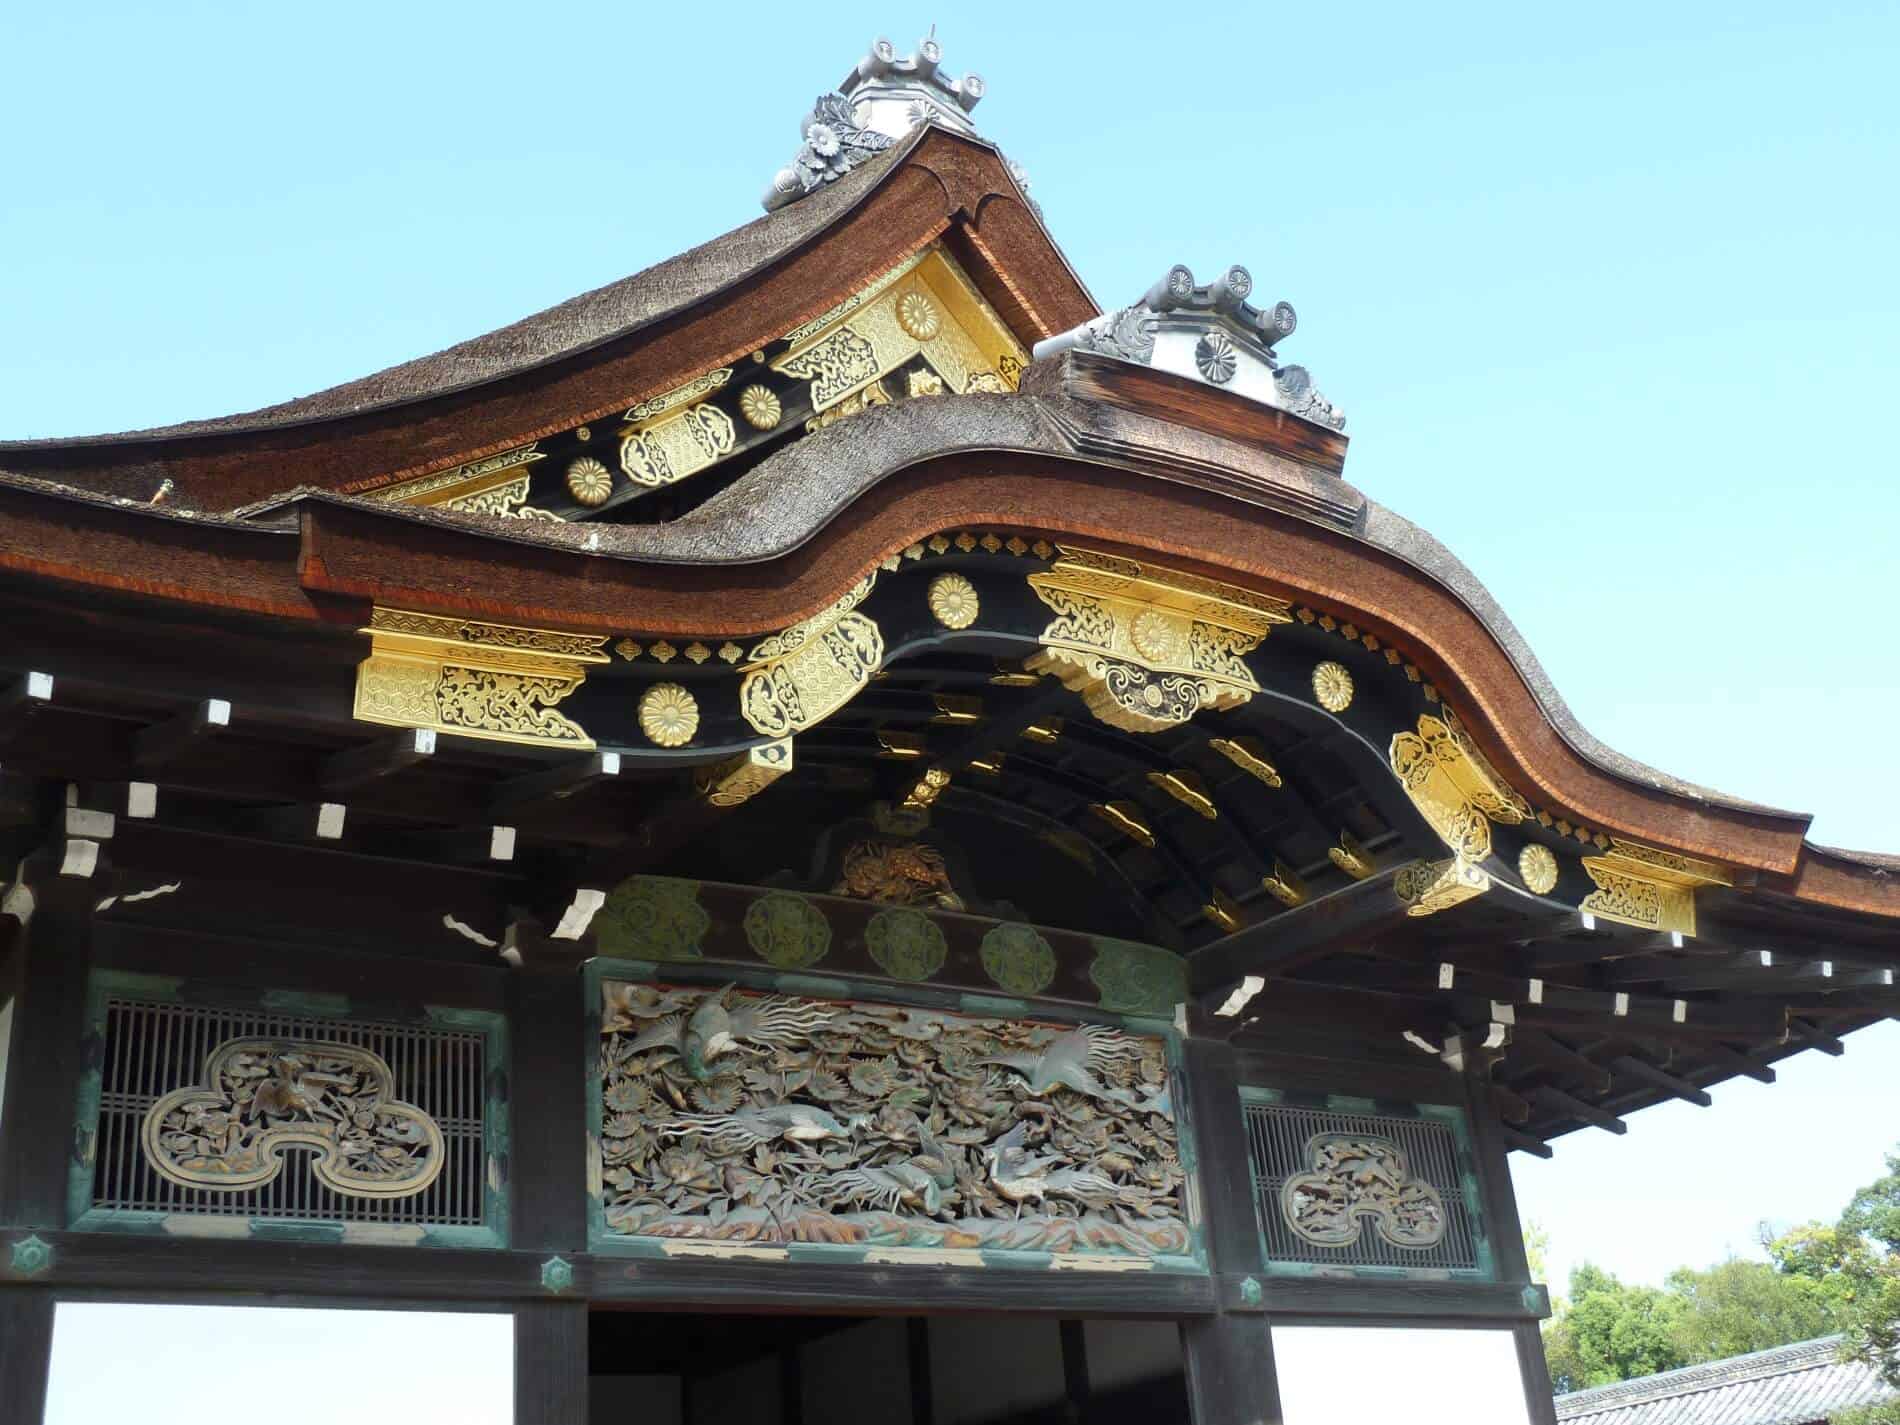 The magnificent gate of Nijo Castle in Kyoto